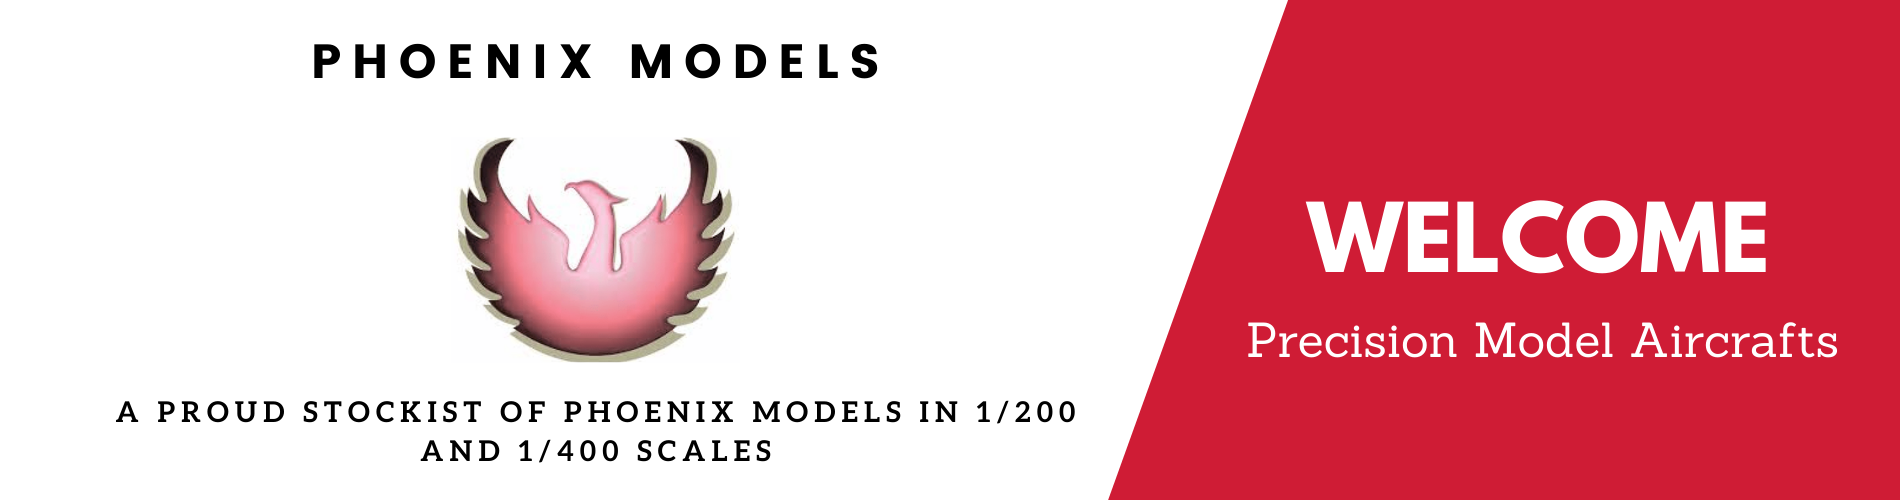 Stockist of Phoenix Models - precision model aircraft